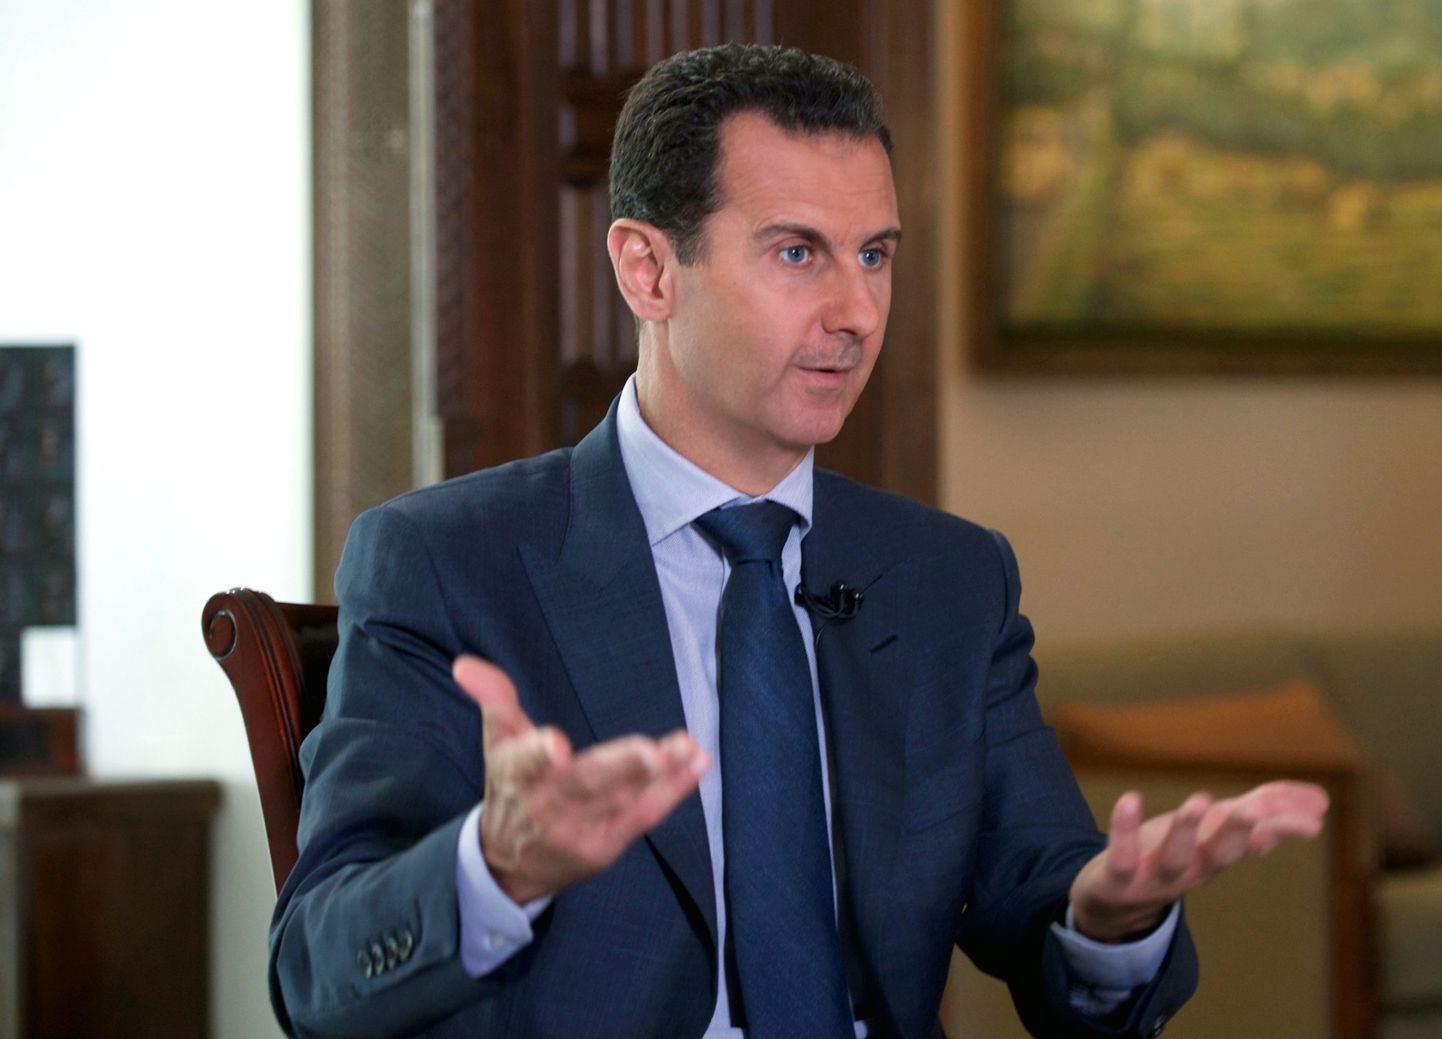 Süüria presidenti Bashar al-Assad